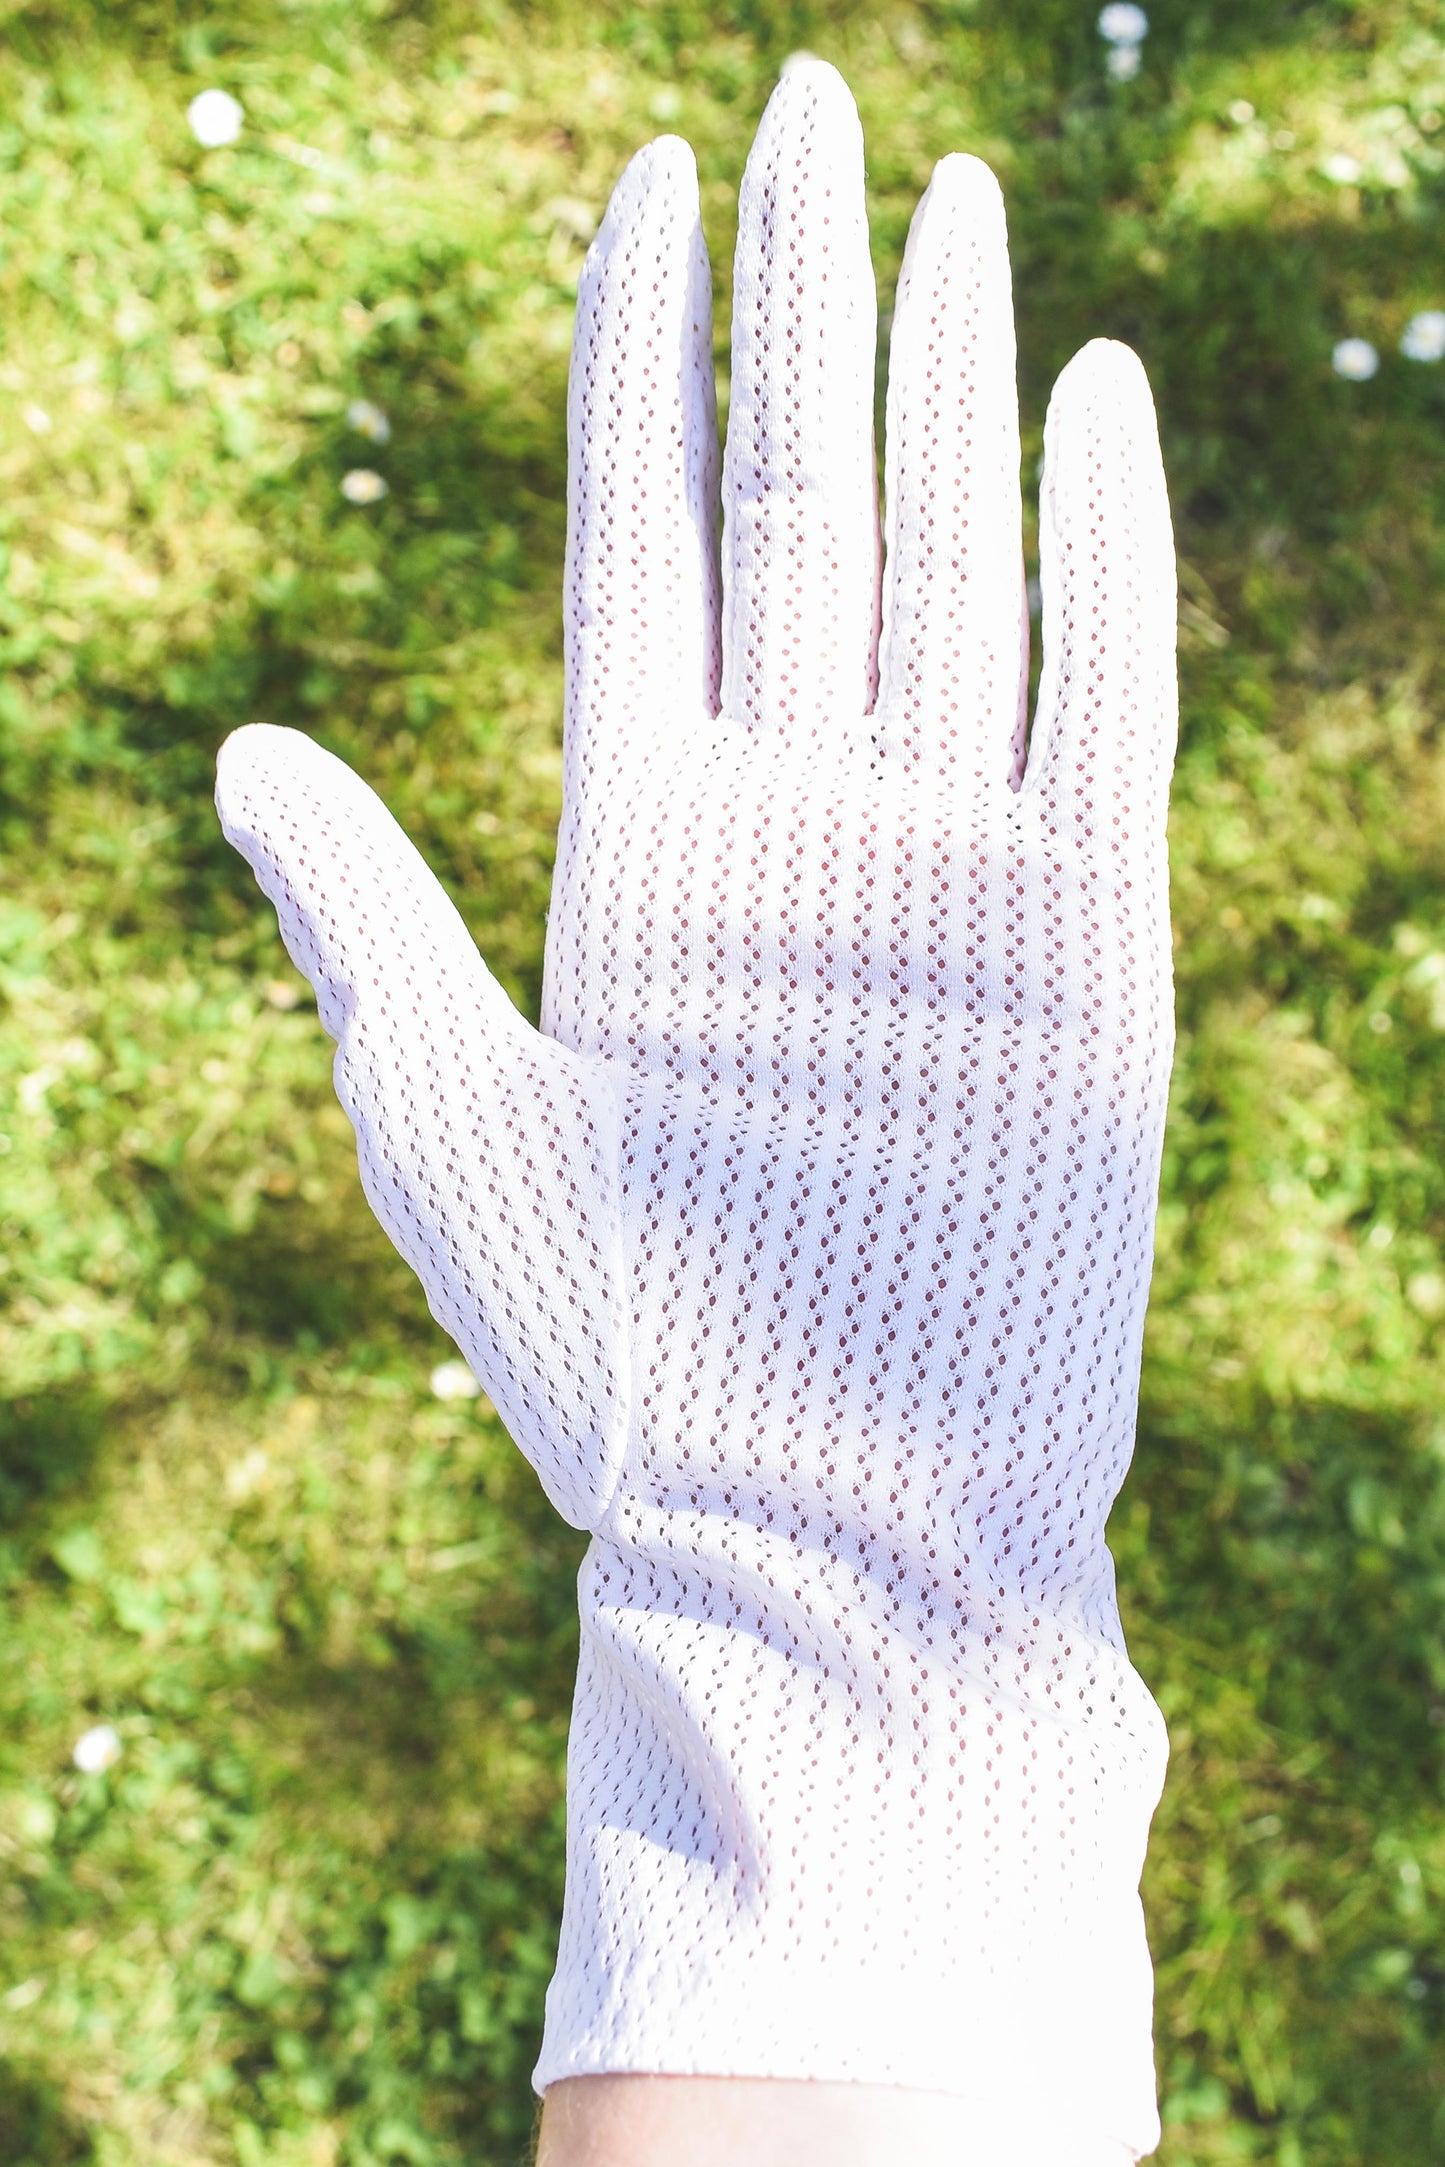 NEW IN! White gloves